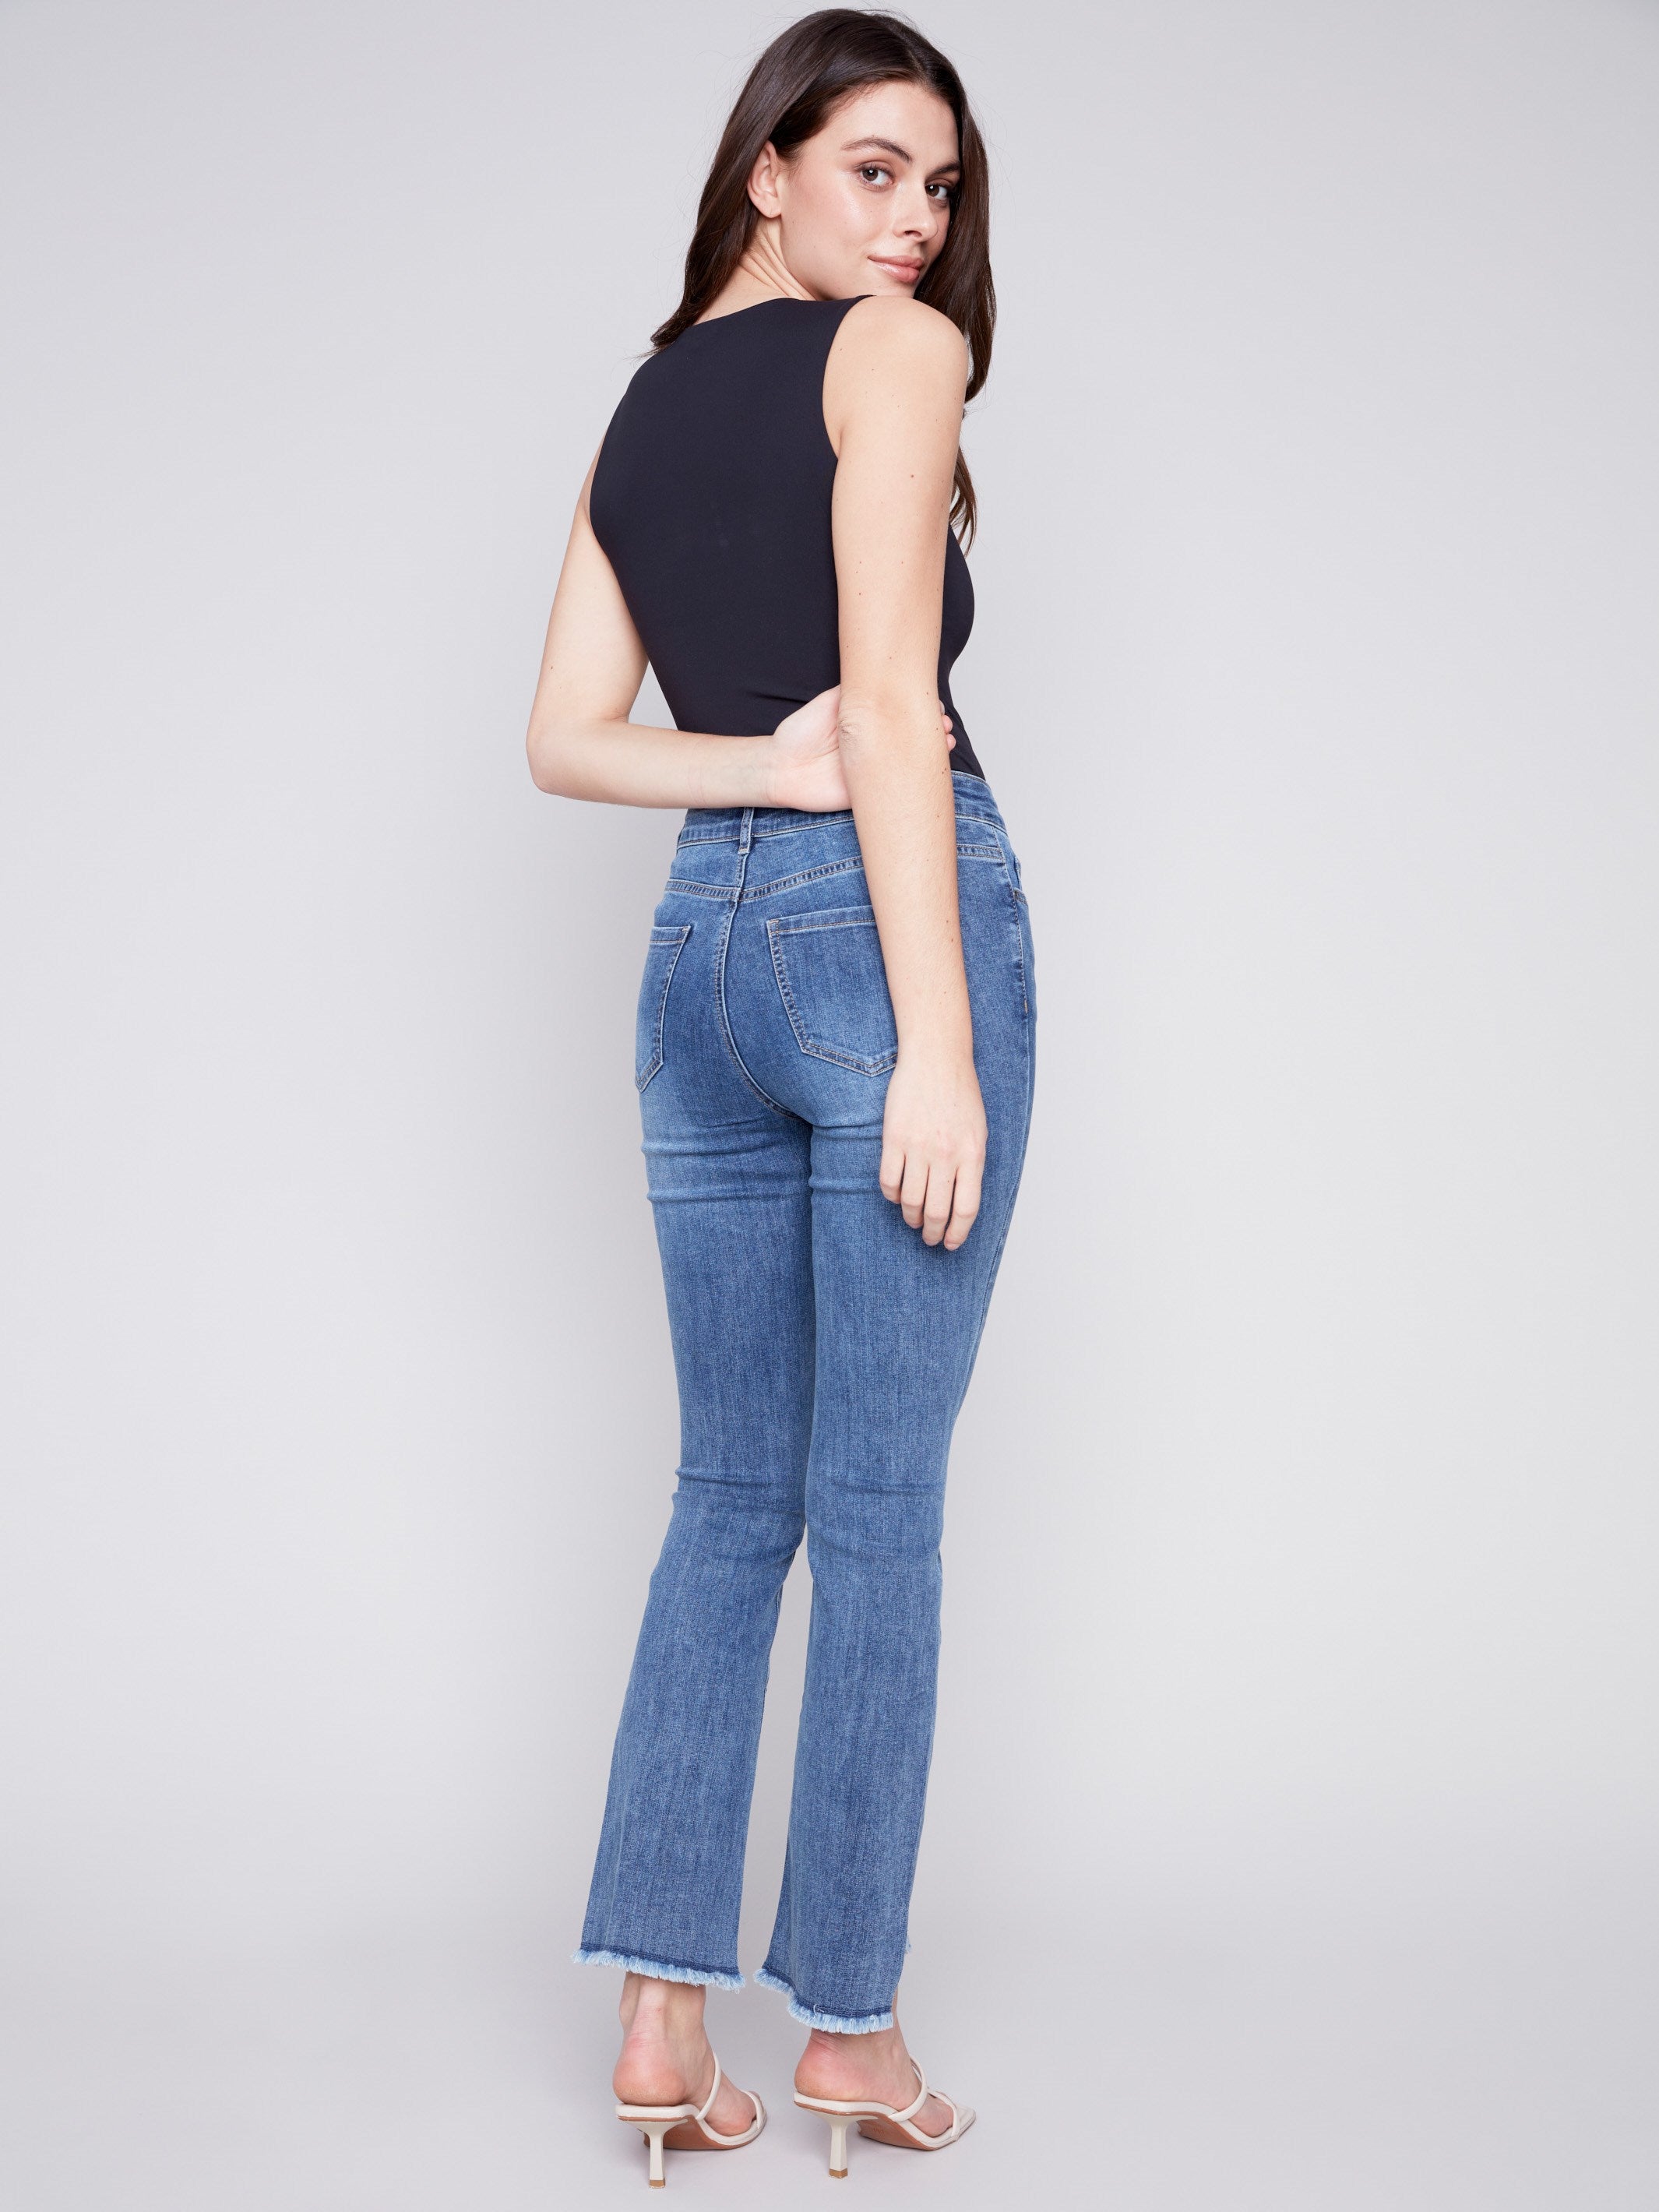 Charlie B Bootcut Jeans with Asymmetrical Hem - Medium Blue - Image 5